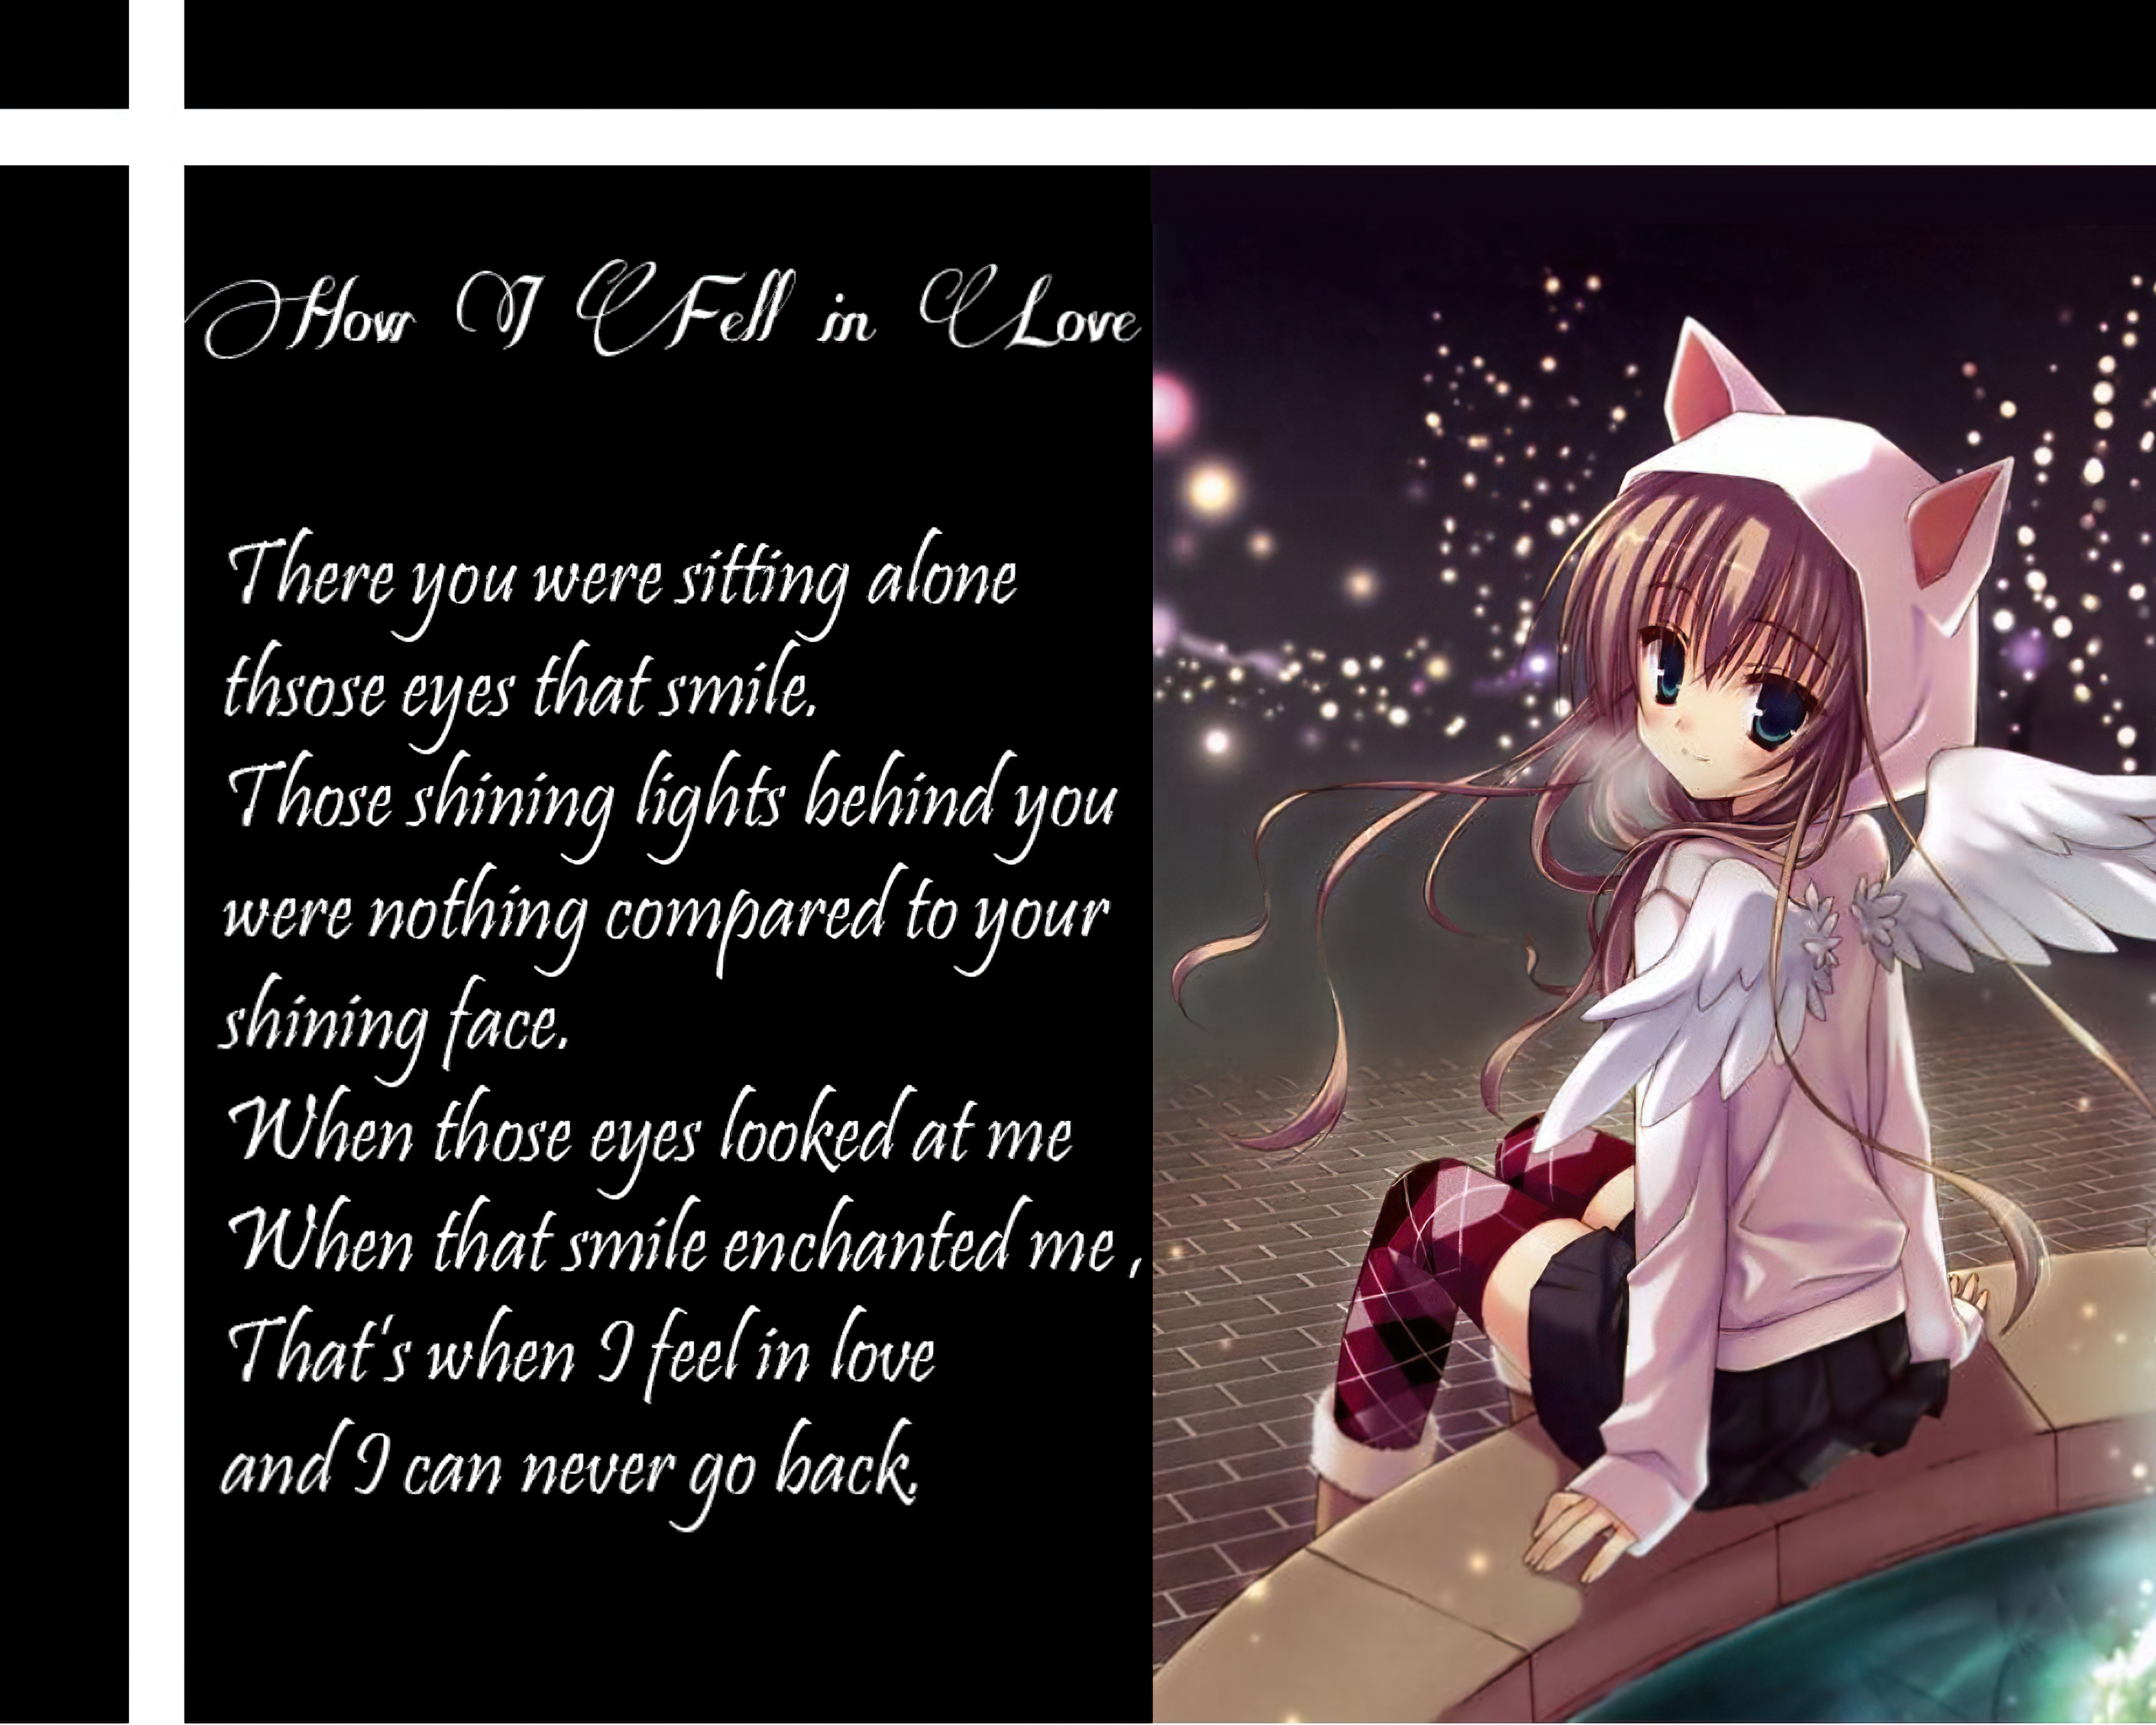 Anime's Life - Anime's Life Poem by Ianne de Angel